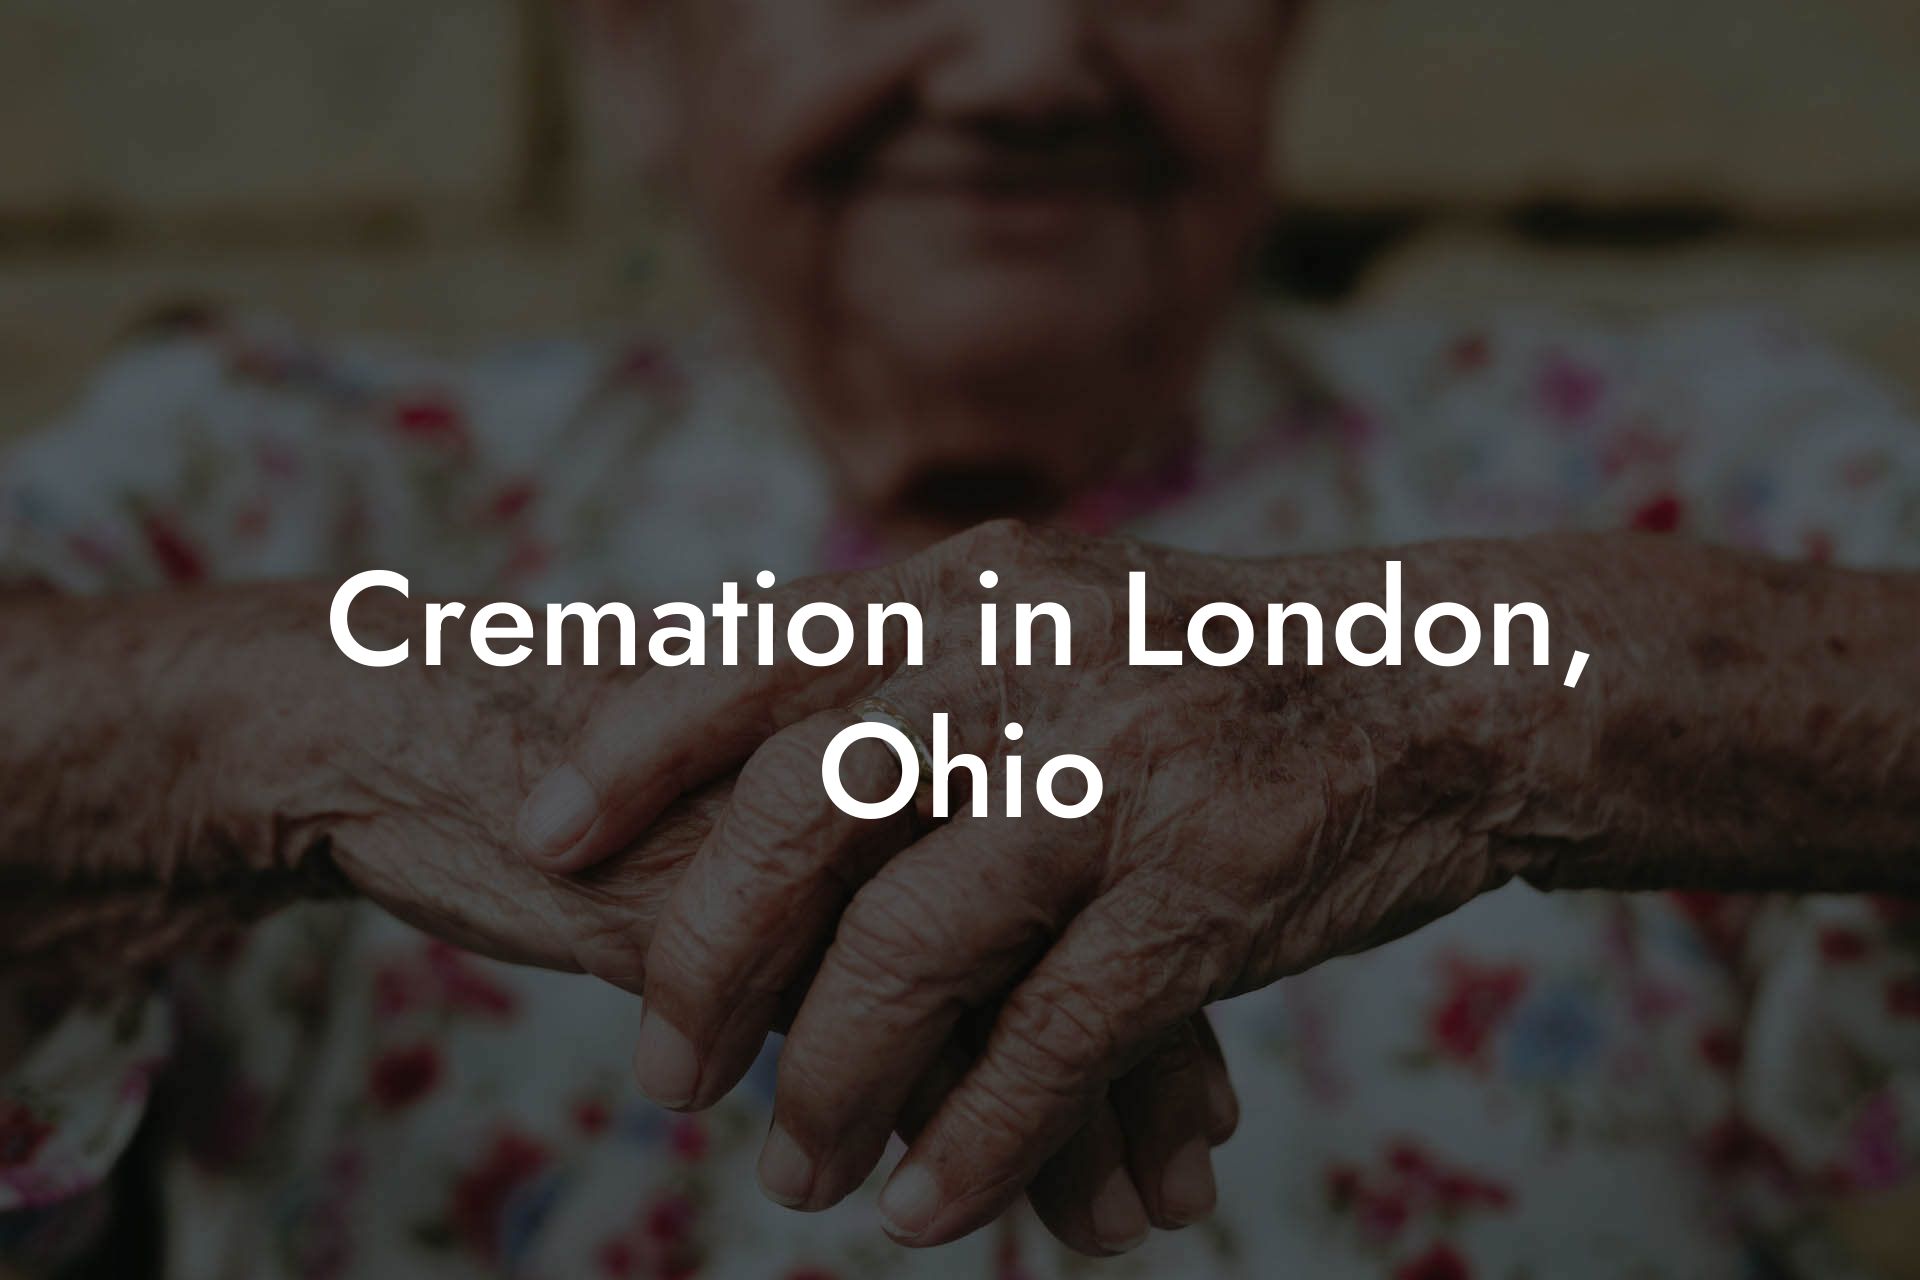 Cremation in London, Ohio